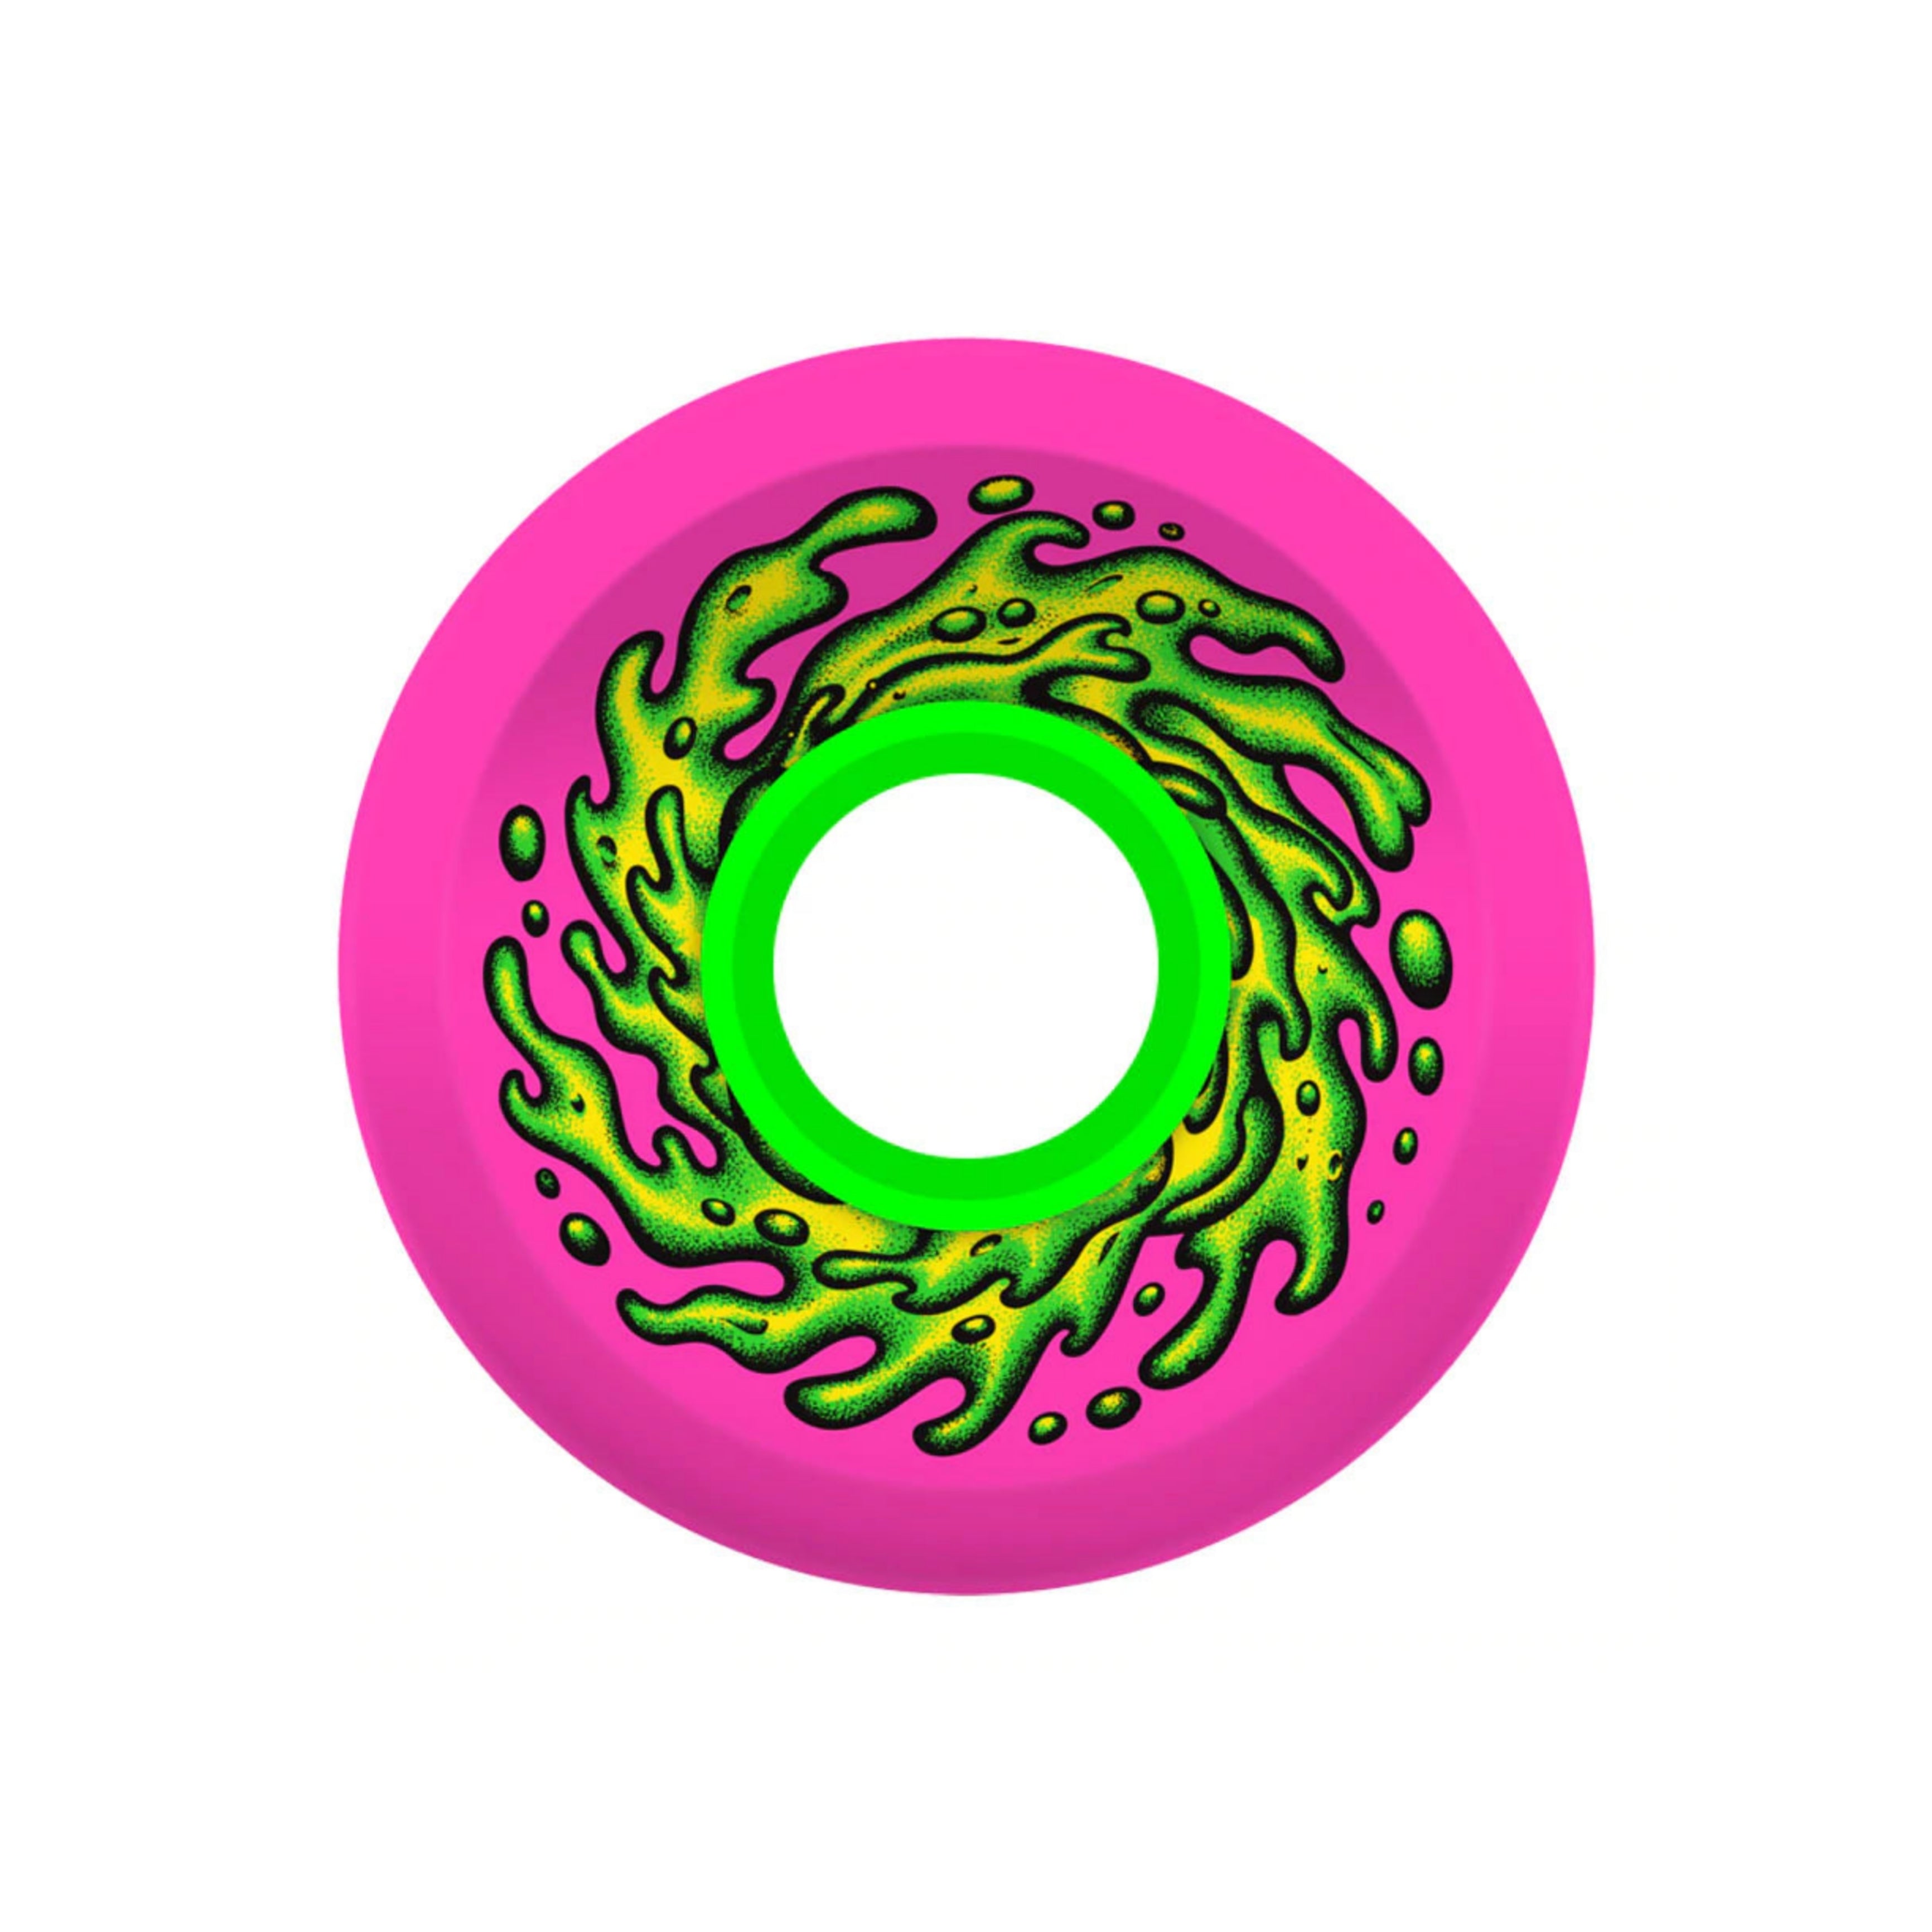 Slime Balls OG Slime Pink 78a Skateboard Wheels 66mm – Head Rock 